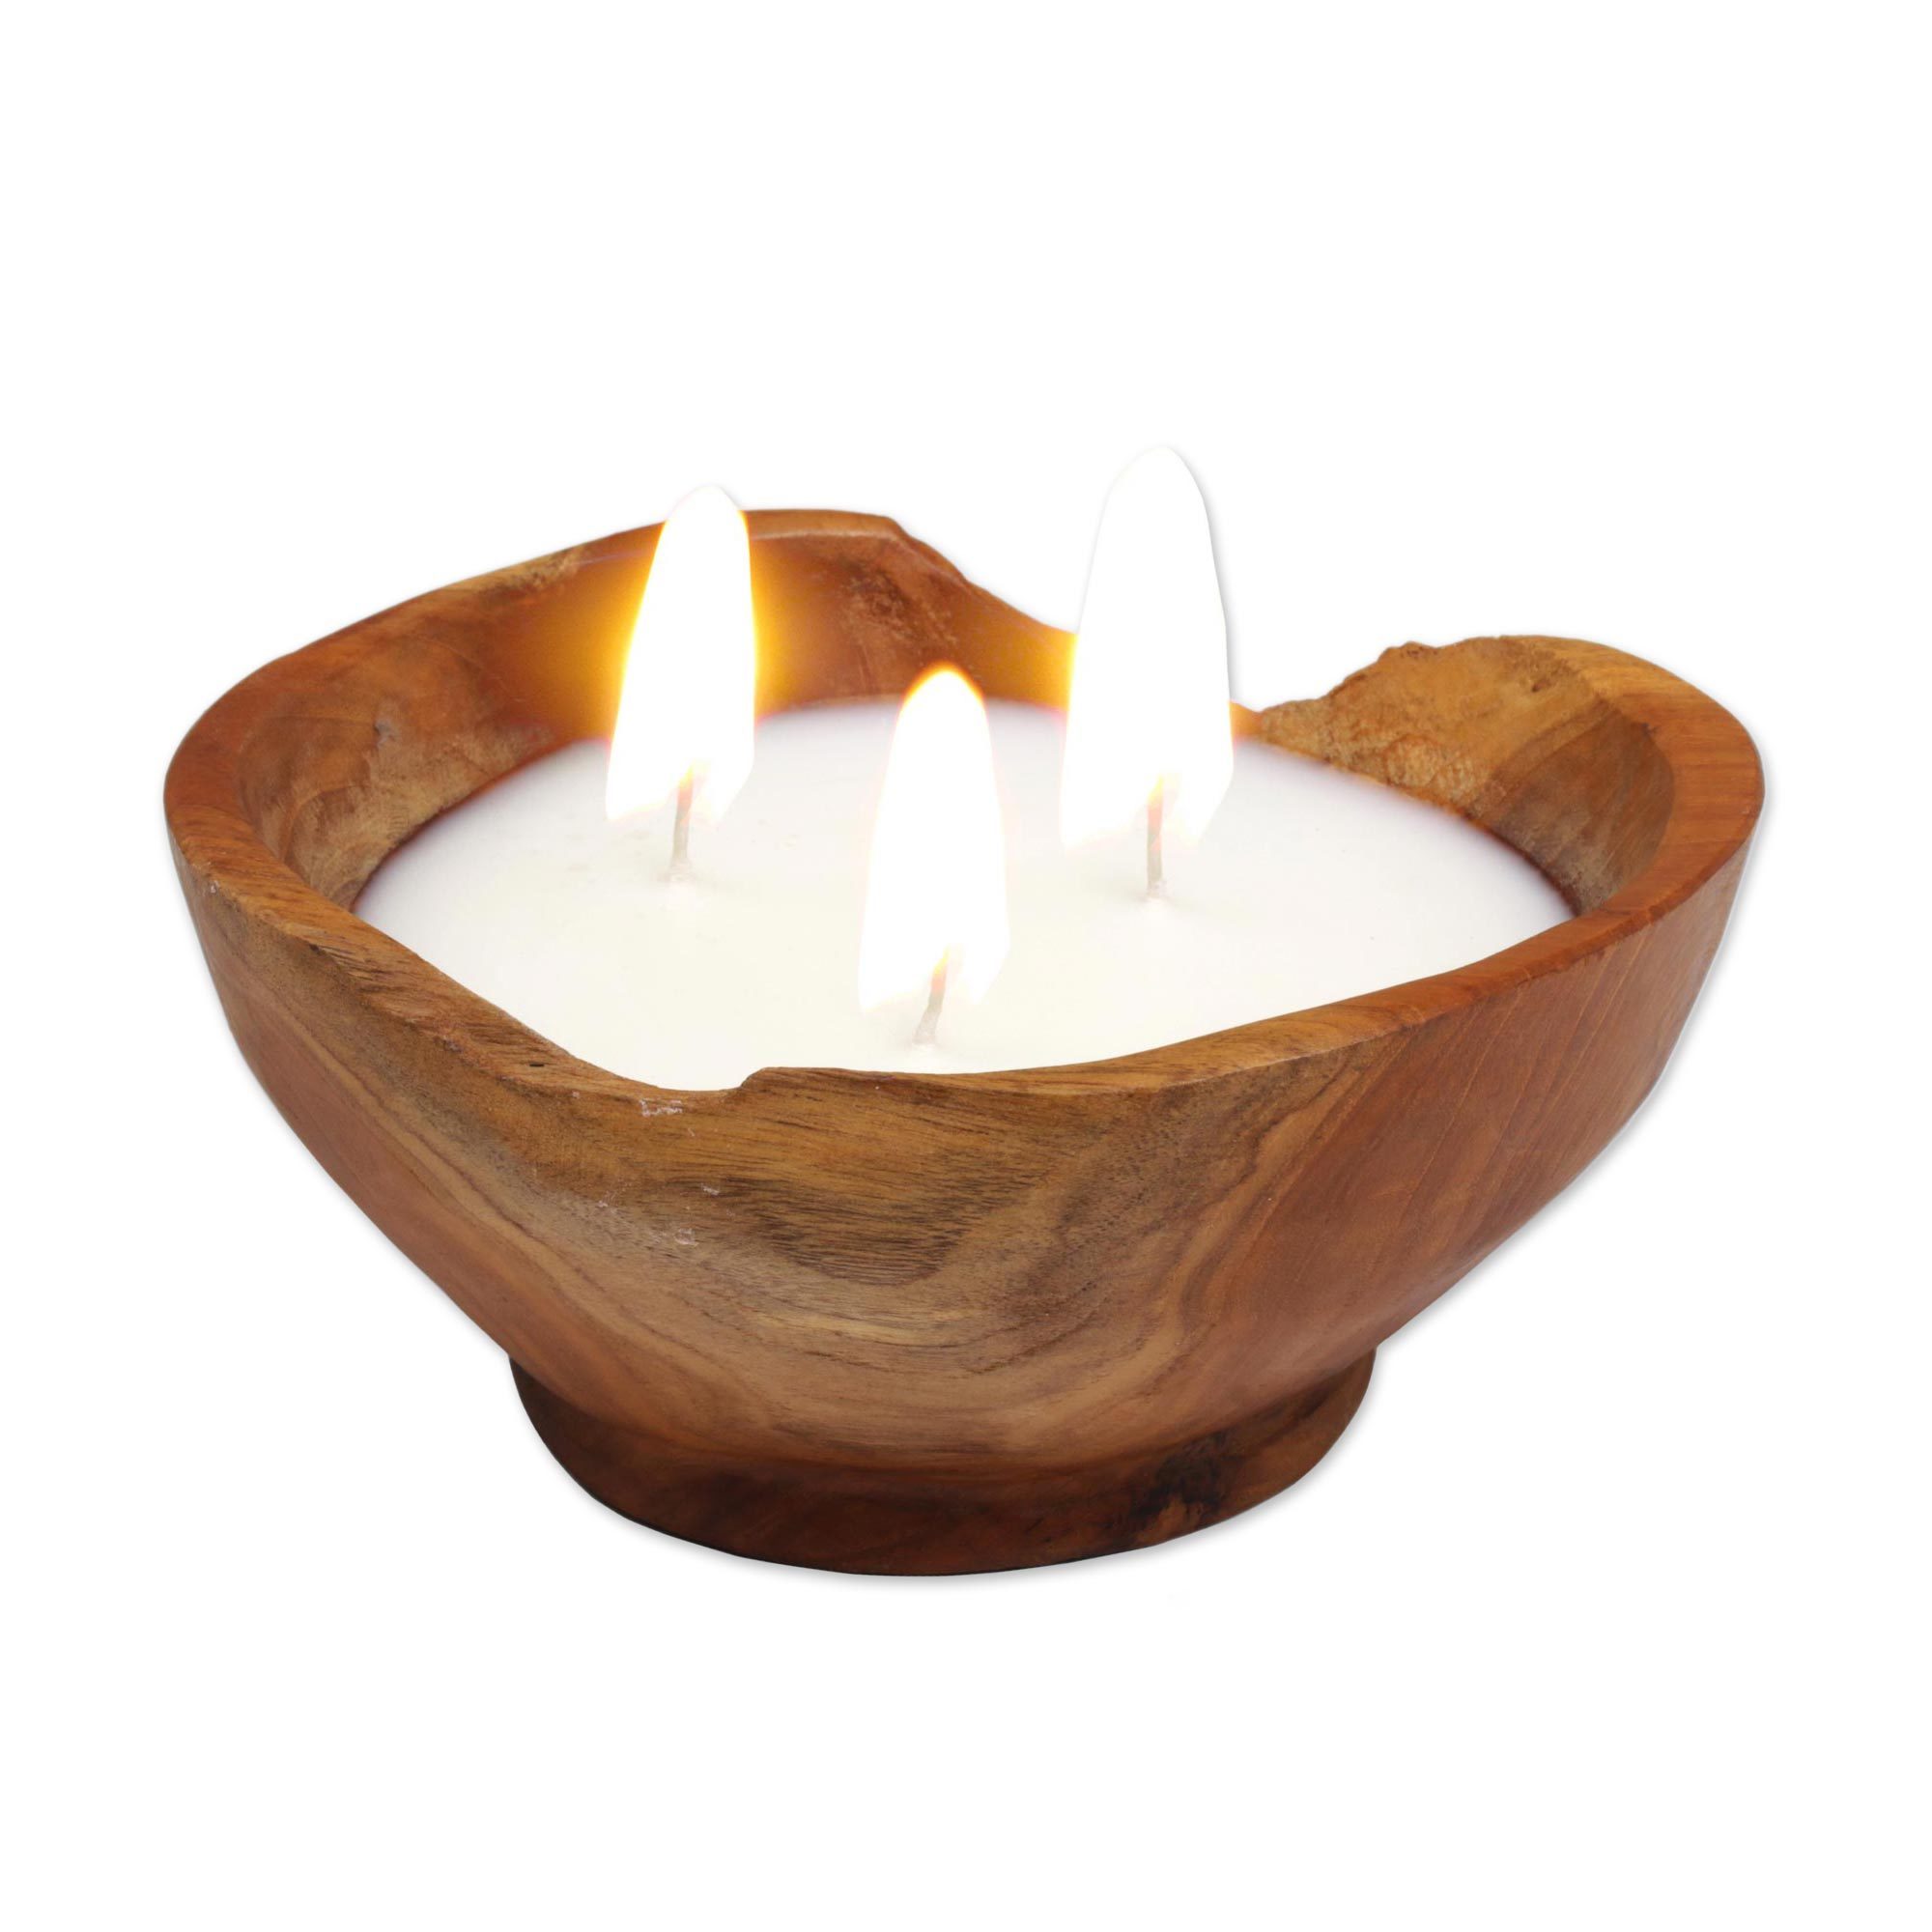 Essential Elements Candle, Blood Orange & Teakwood - 1 candle, 9 oz